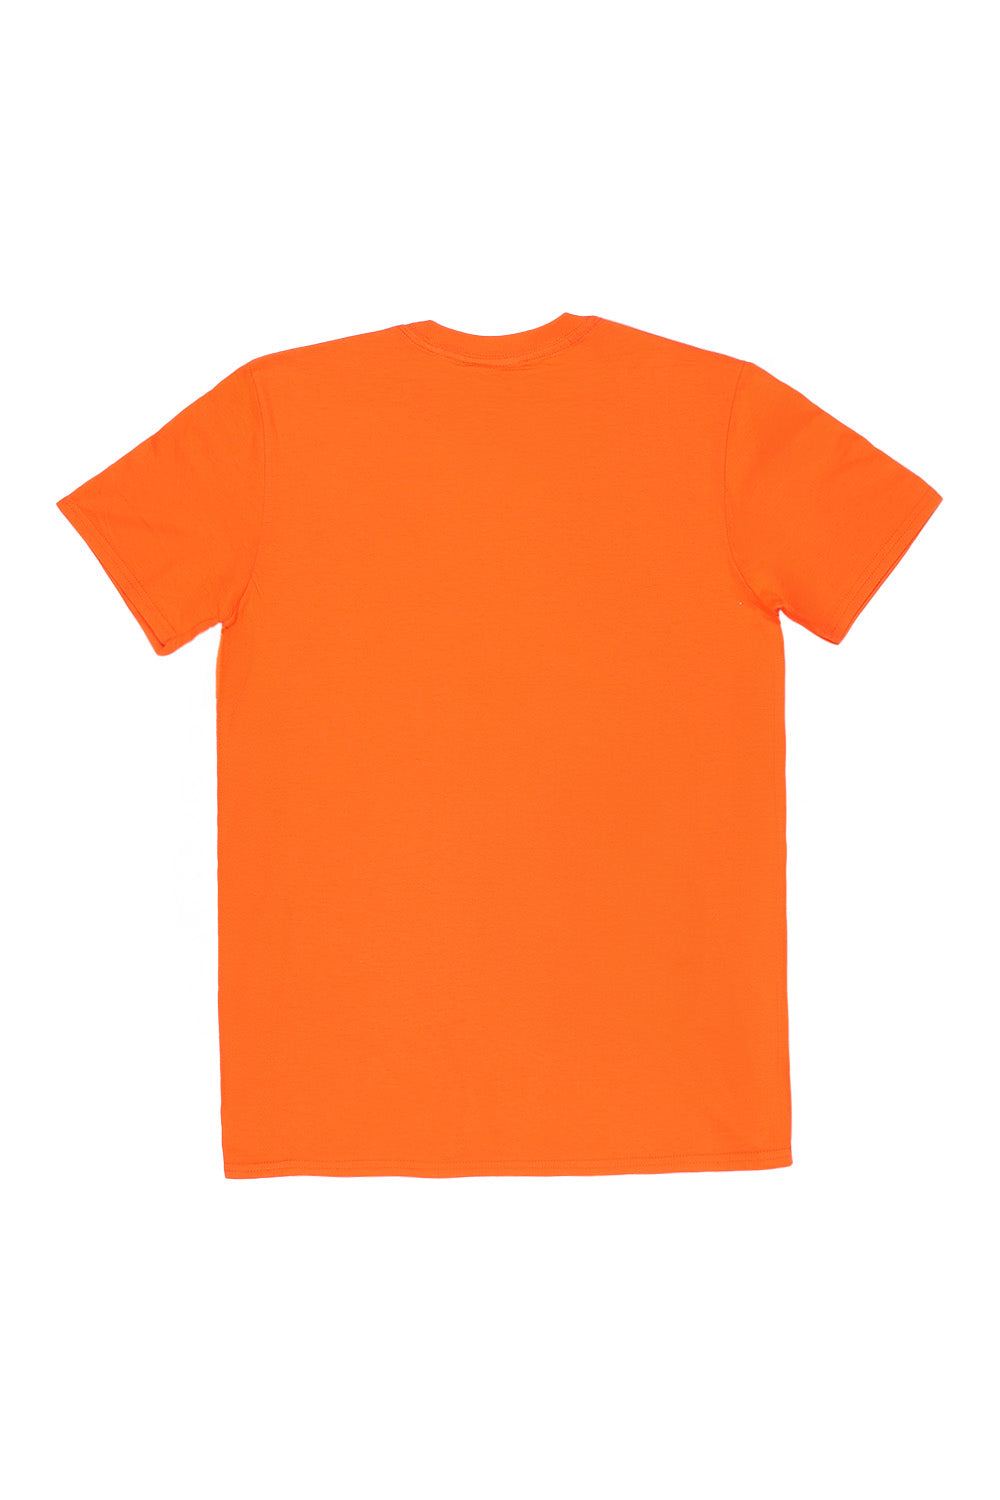 Santa Monica T-Shirt in Orange (Custom Packs)